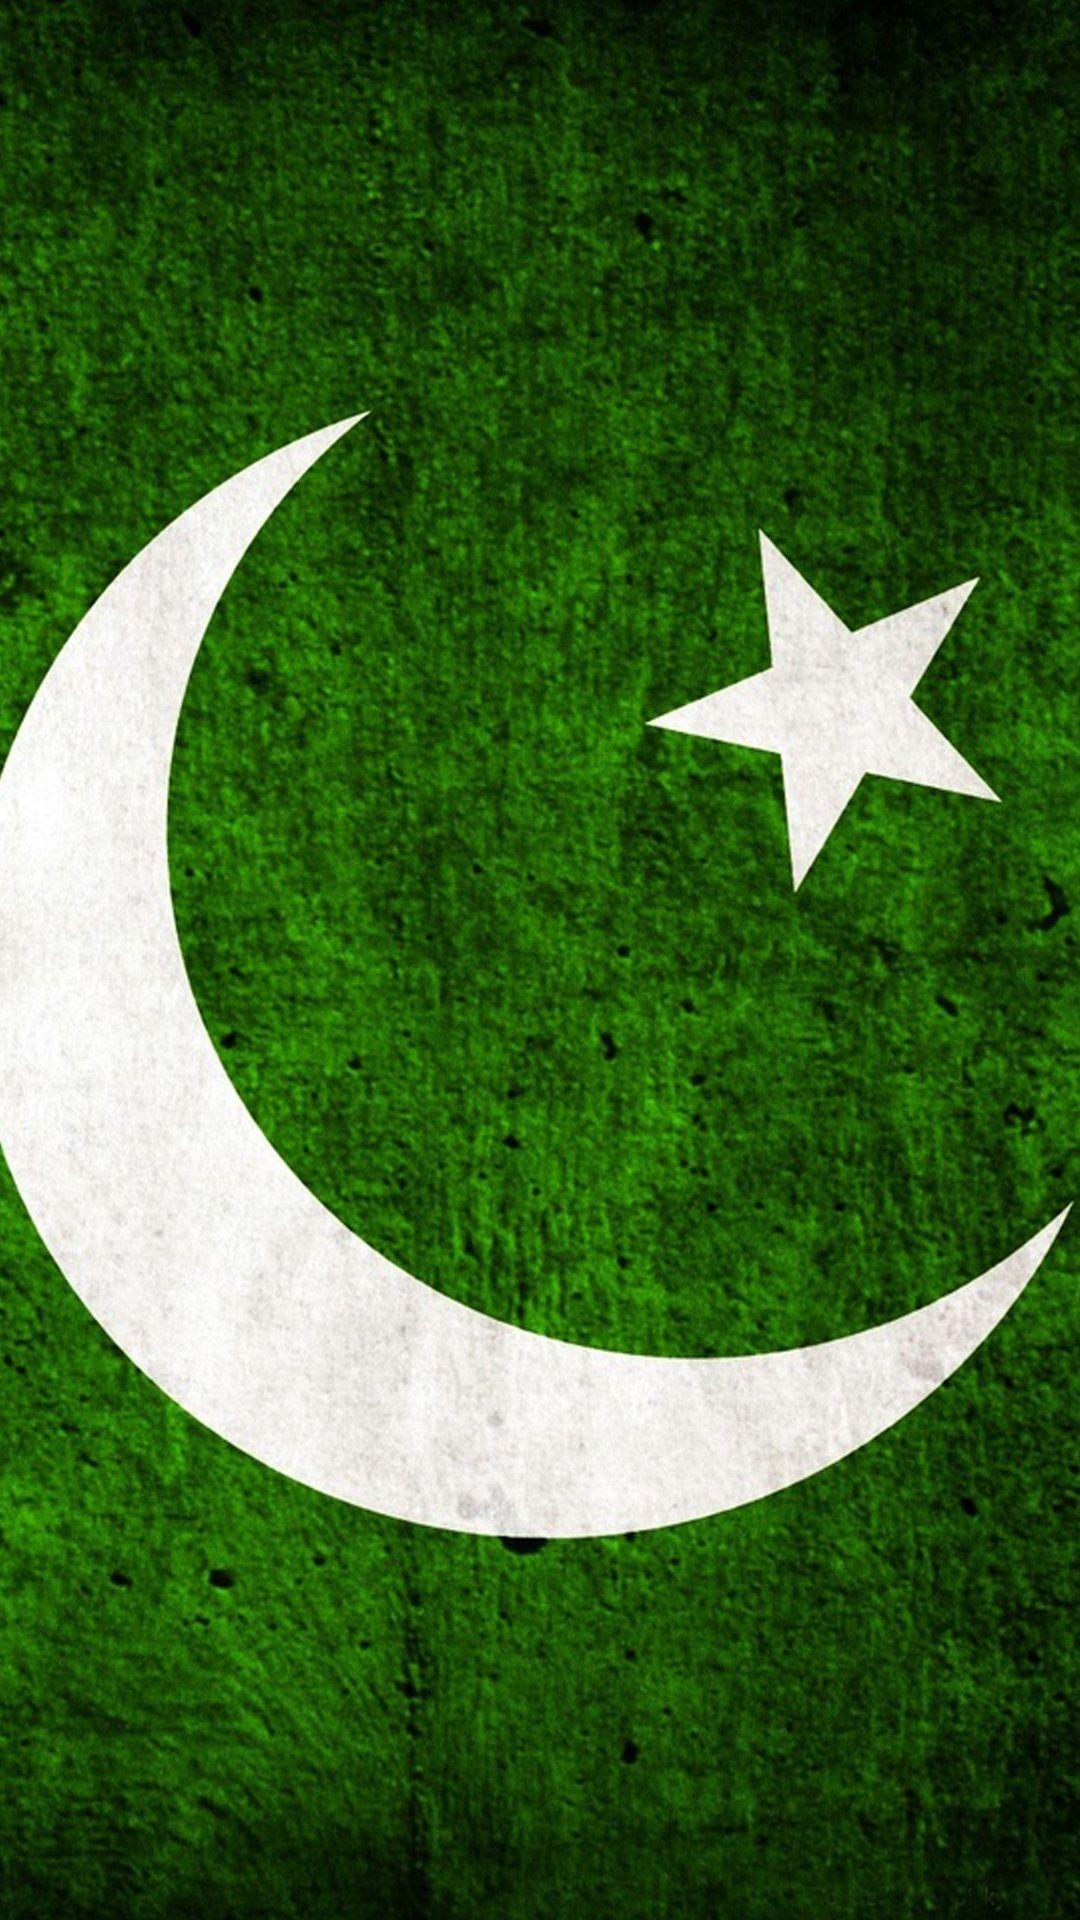 Pakistan flag Samsung Wallpaper, Samsung Galaxy S Galaxy S4